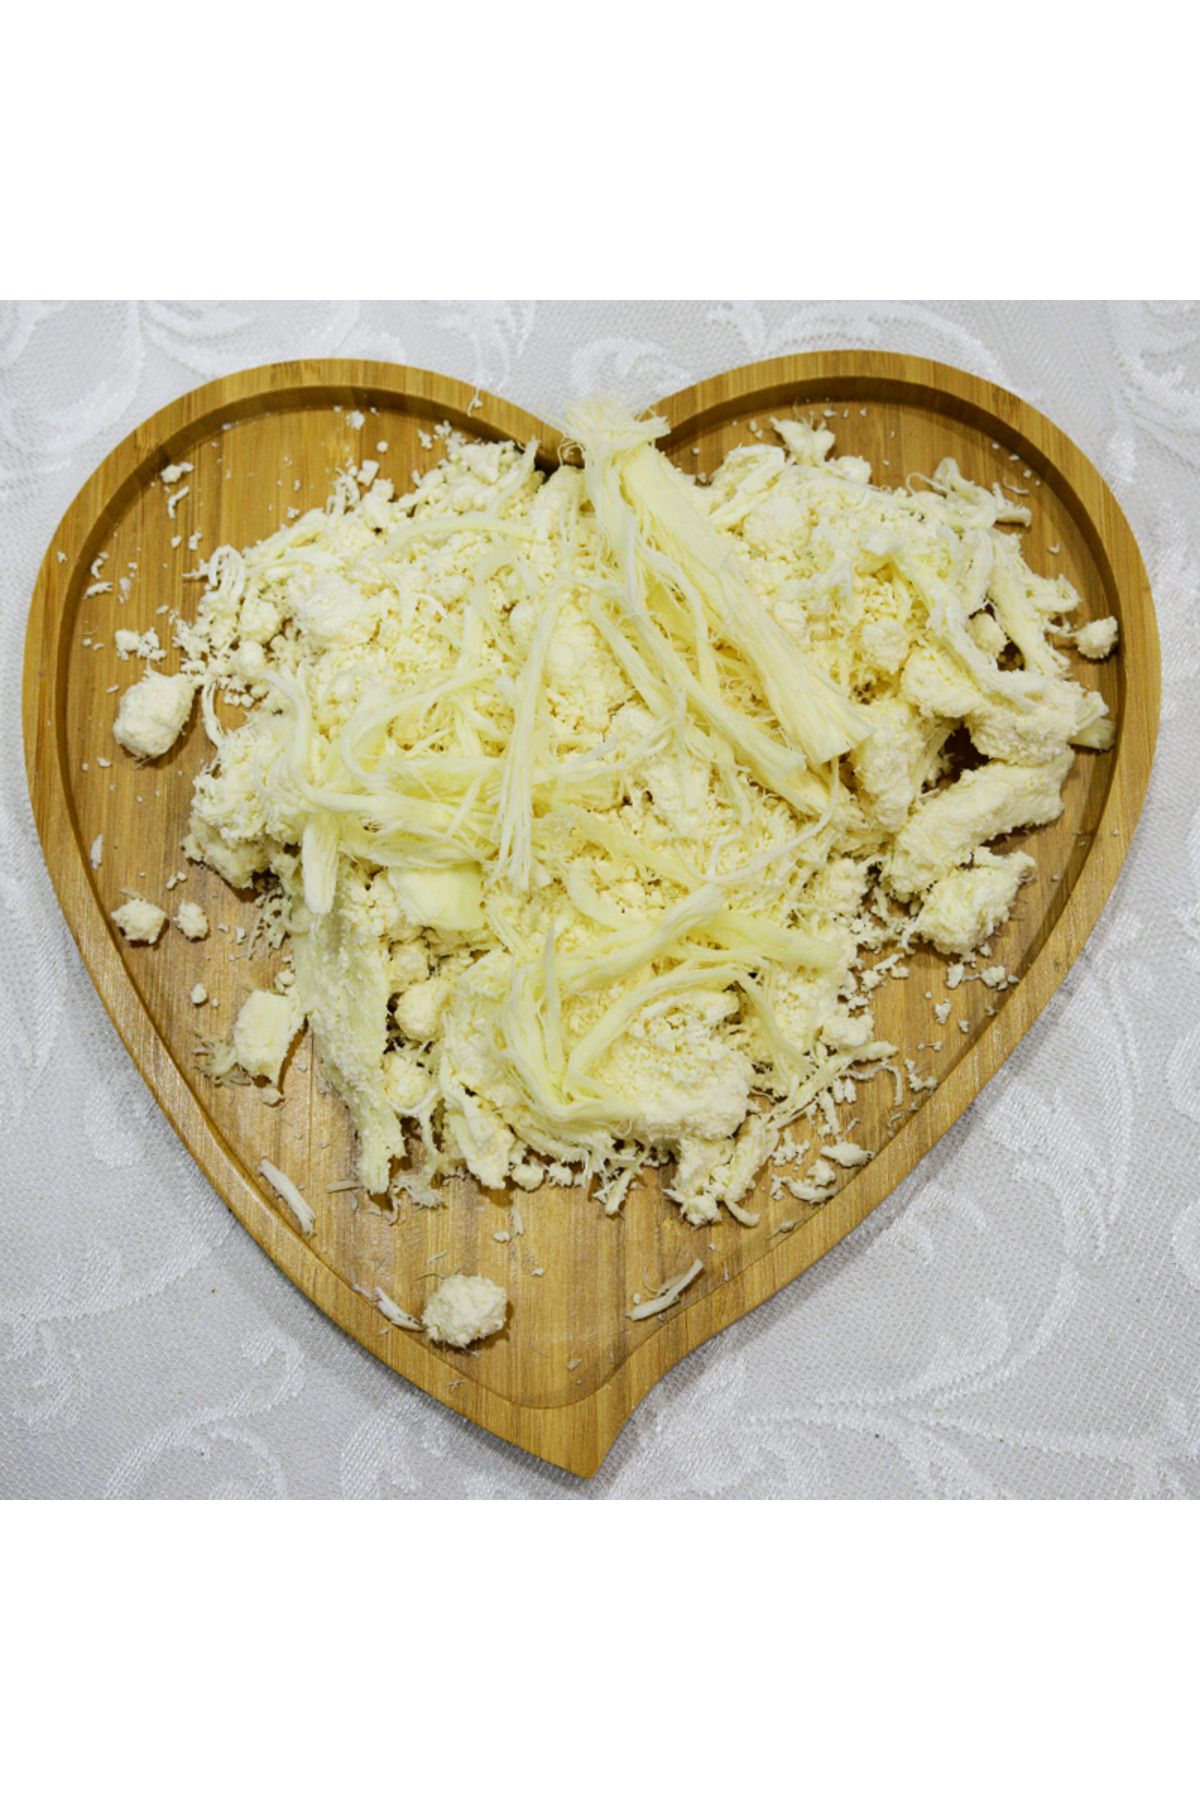 çiftçipeynircilik Artvin Ardanuç Besili Bidon Peyniri (Tepme Peynir) 1 kg